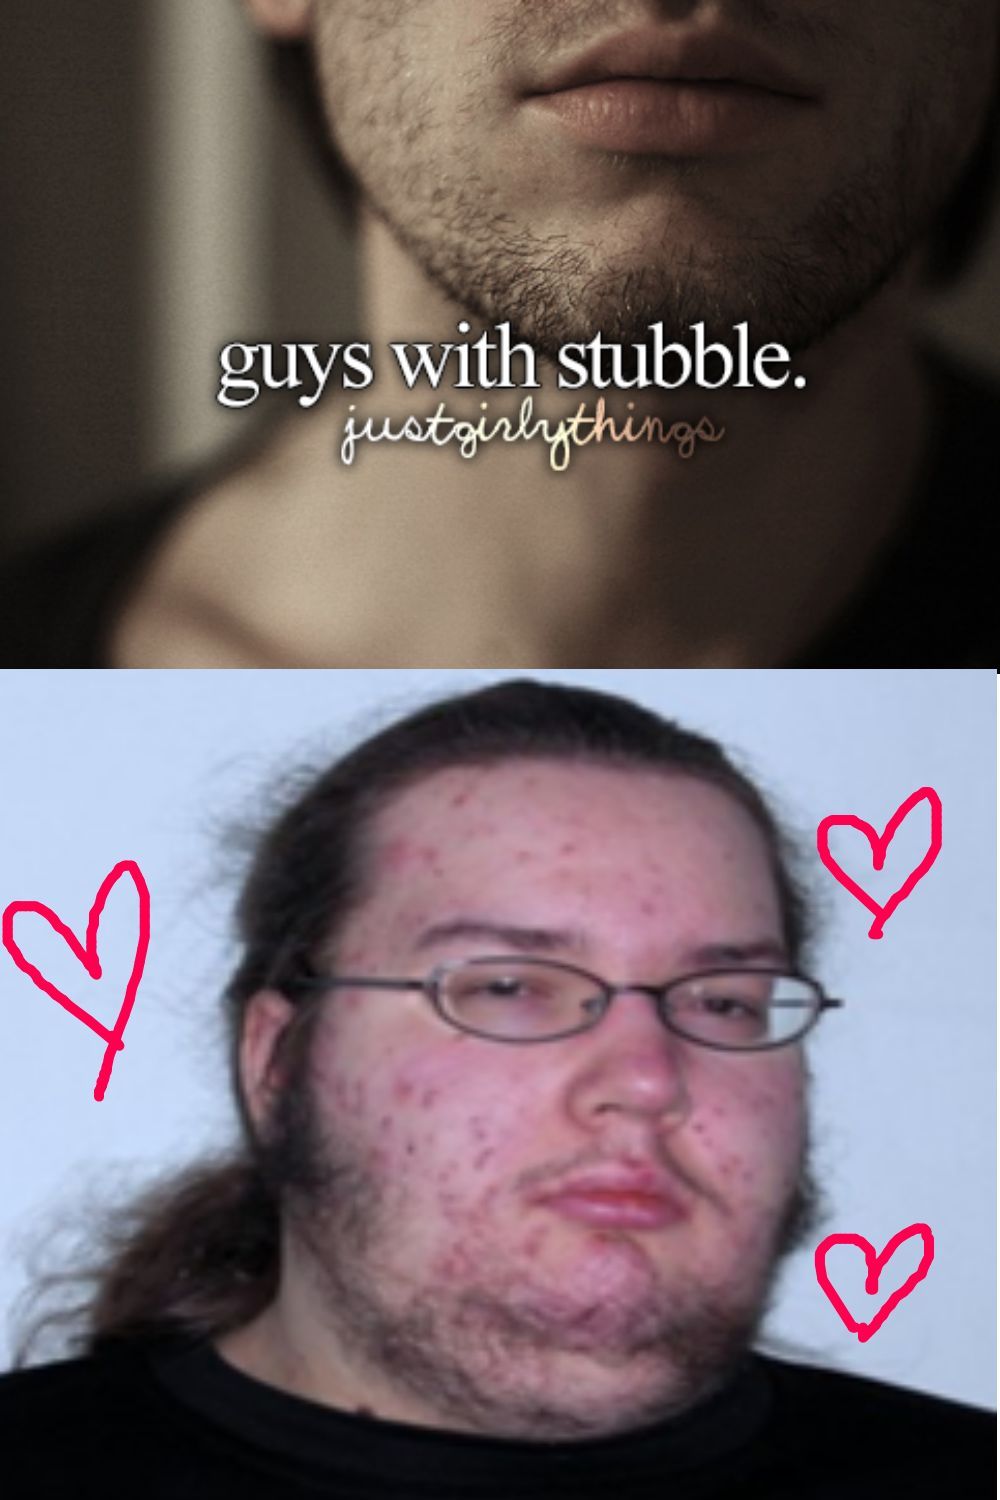 Guys with stubble - meme